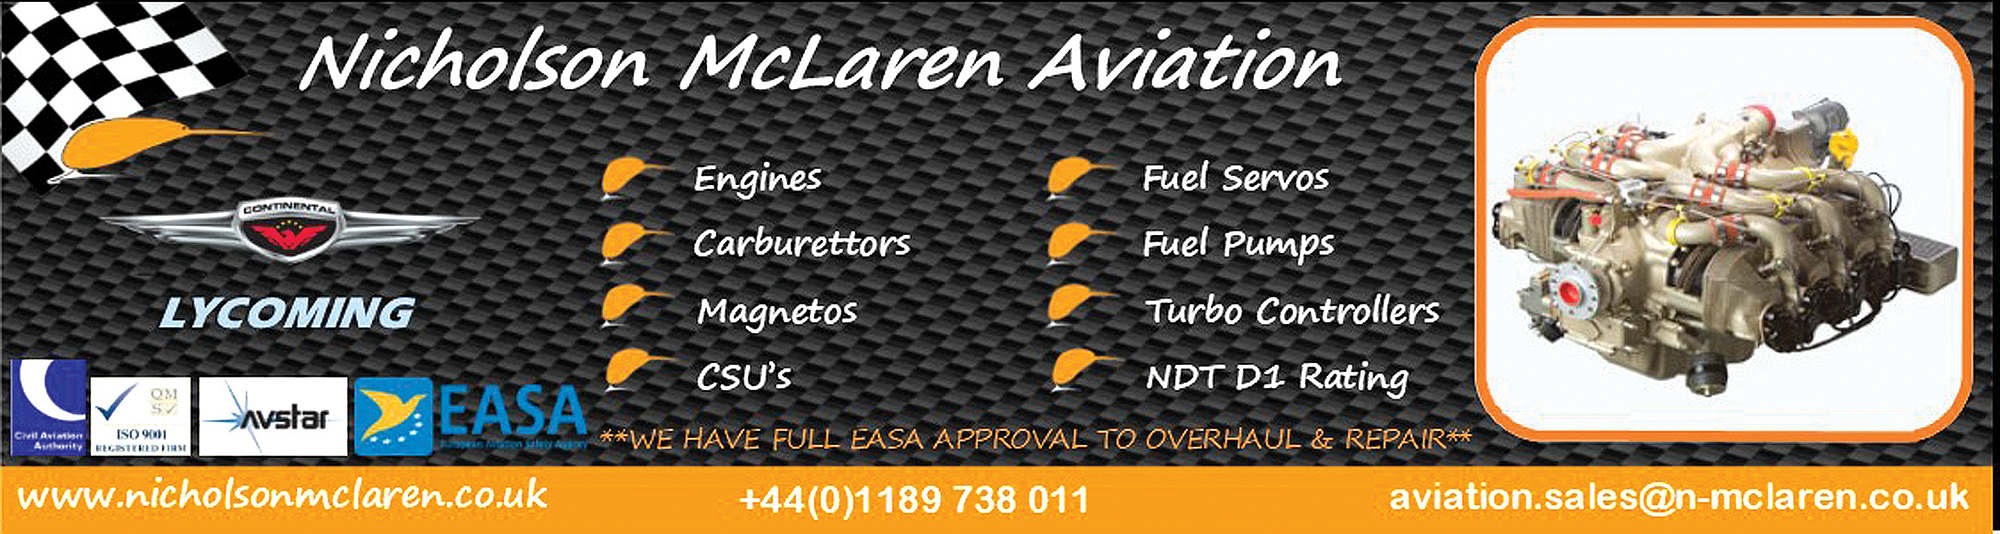 Nicholson McLaren Aviation